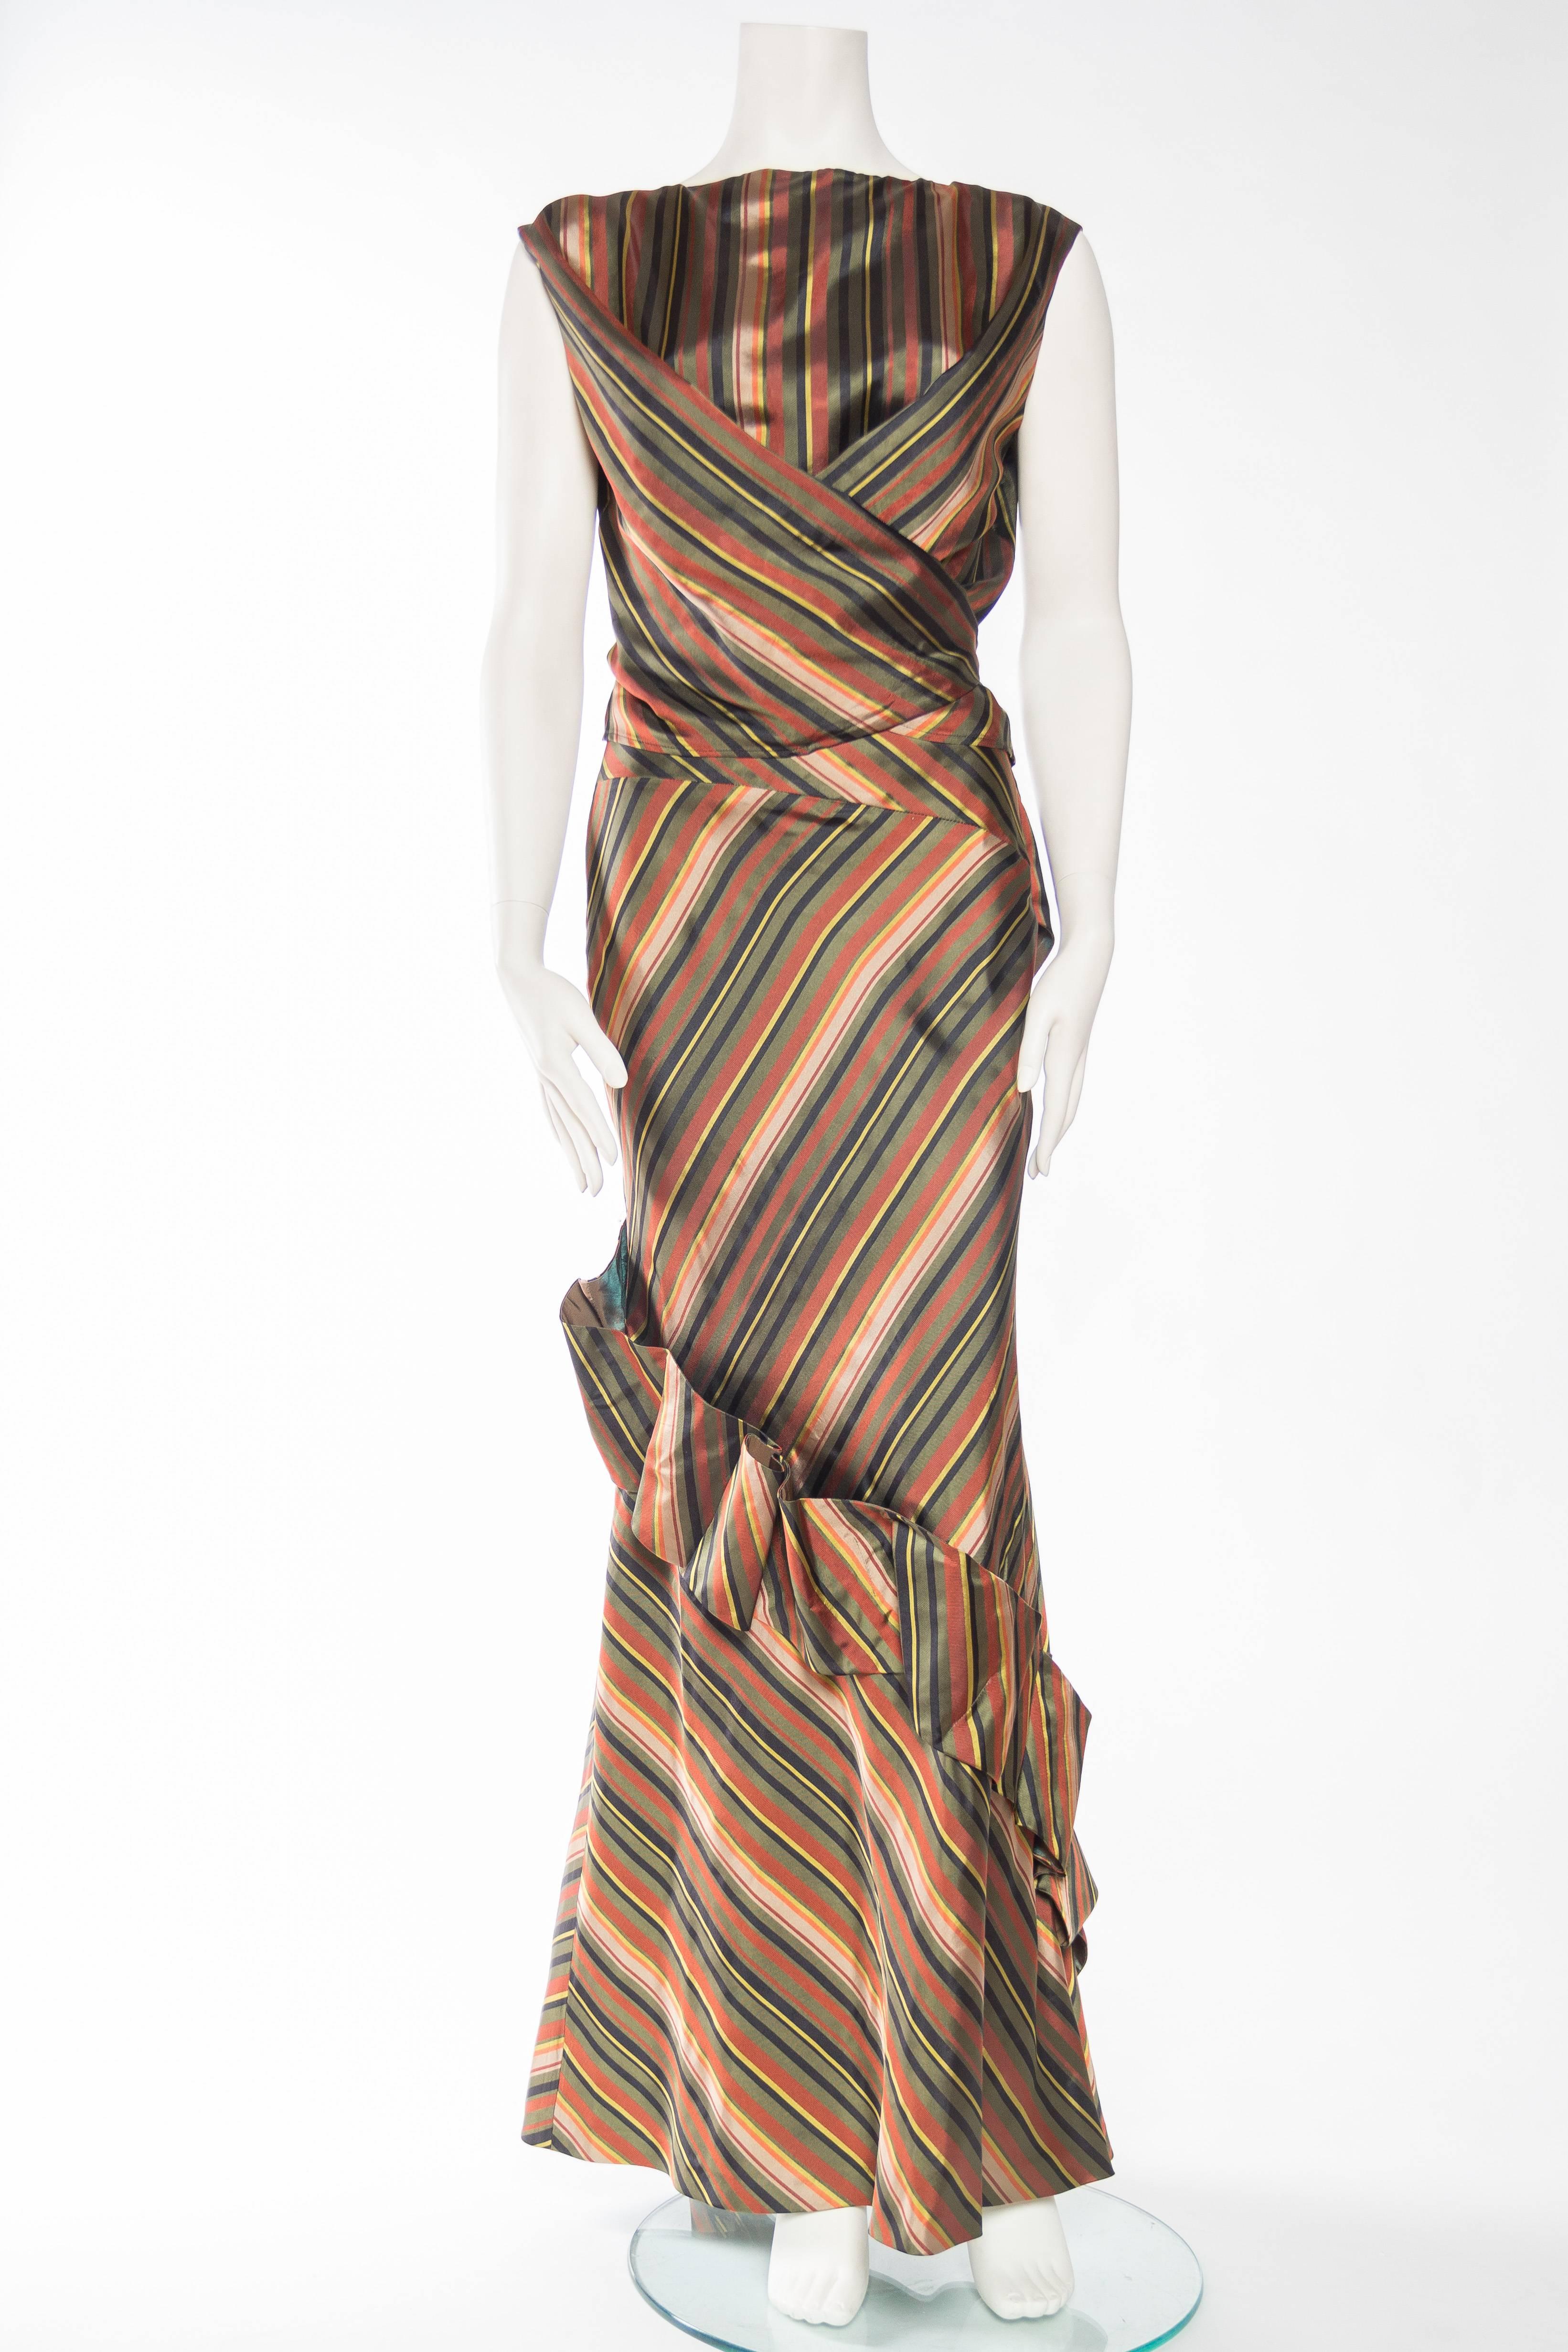 Tagged a European size 40 1990S KENZO Dark Green & Copper Striped Silk Blend Bias Cut Skirt Top 2 Piece Gown 